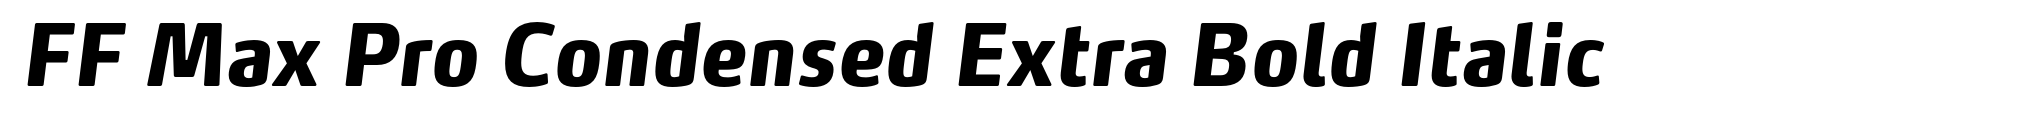 FF Max Pro Condensed Extra Bold Italic image